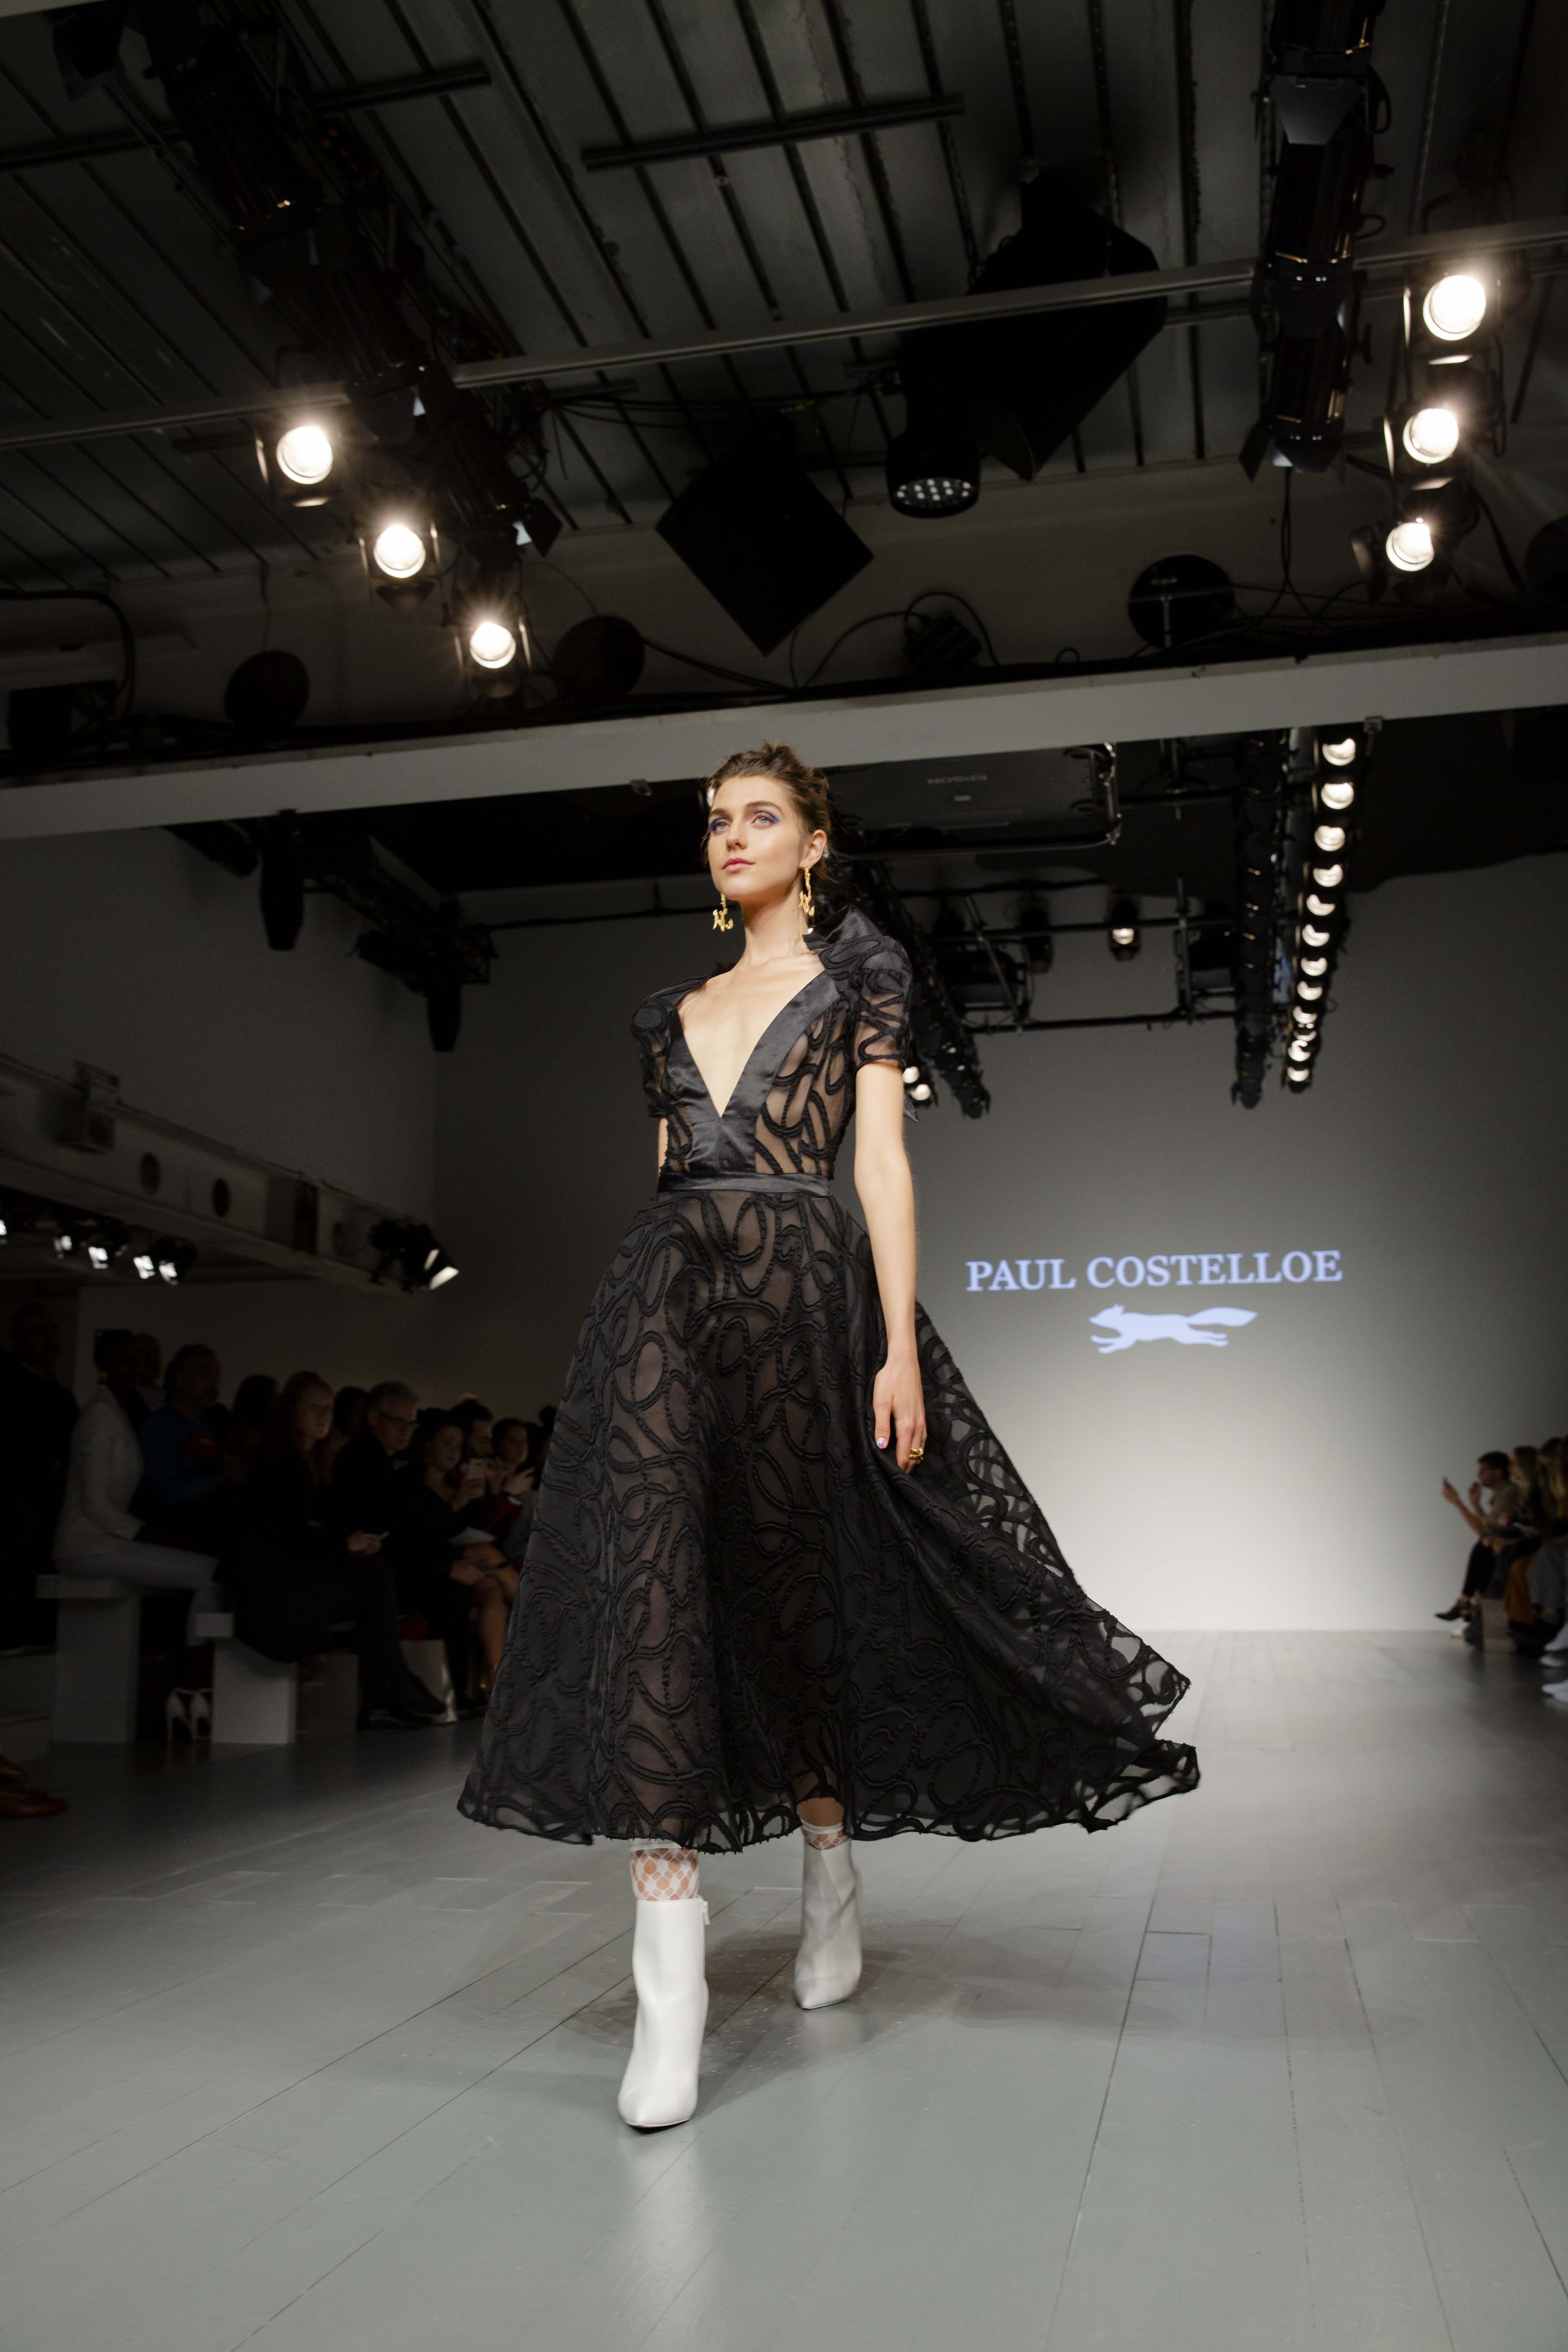 London Fashion Week - Paul Costello 